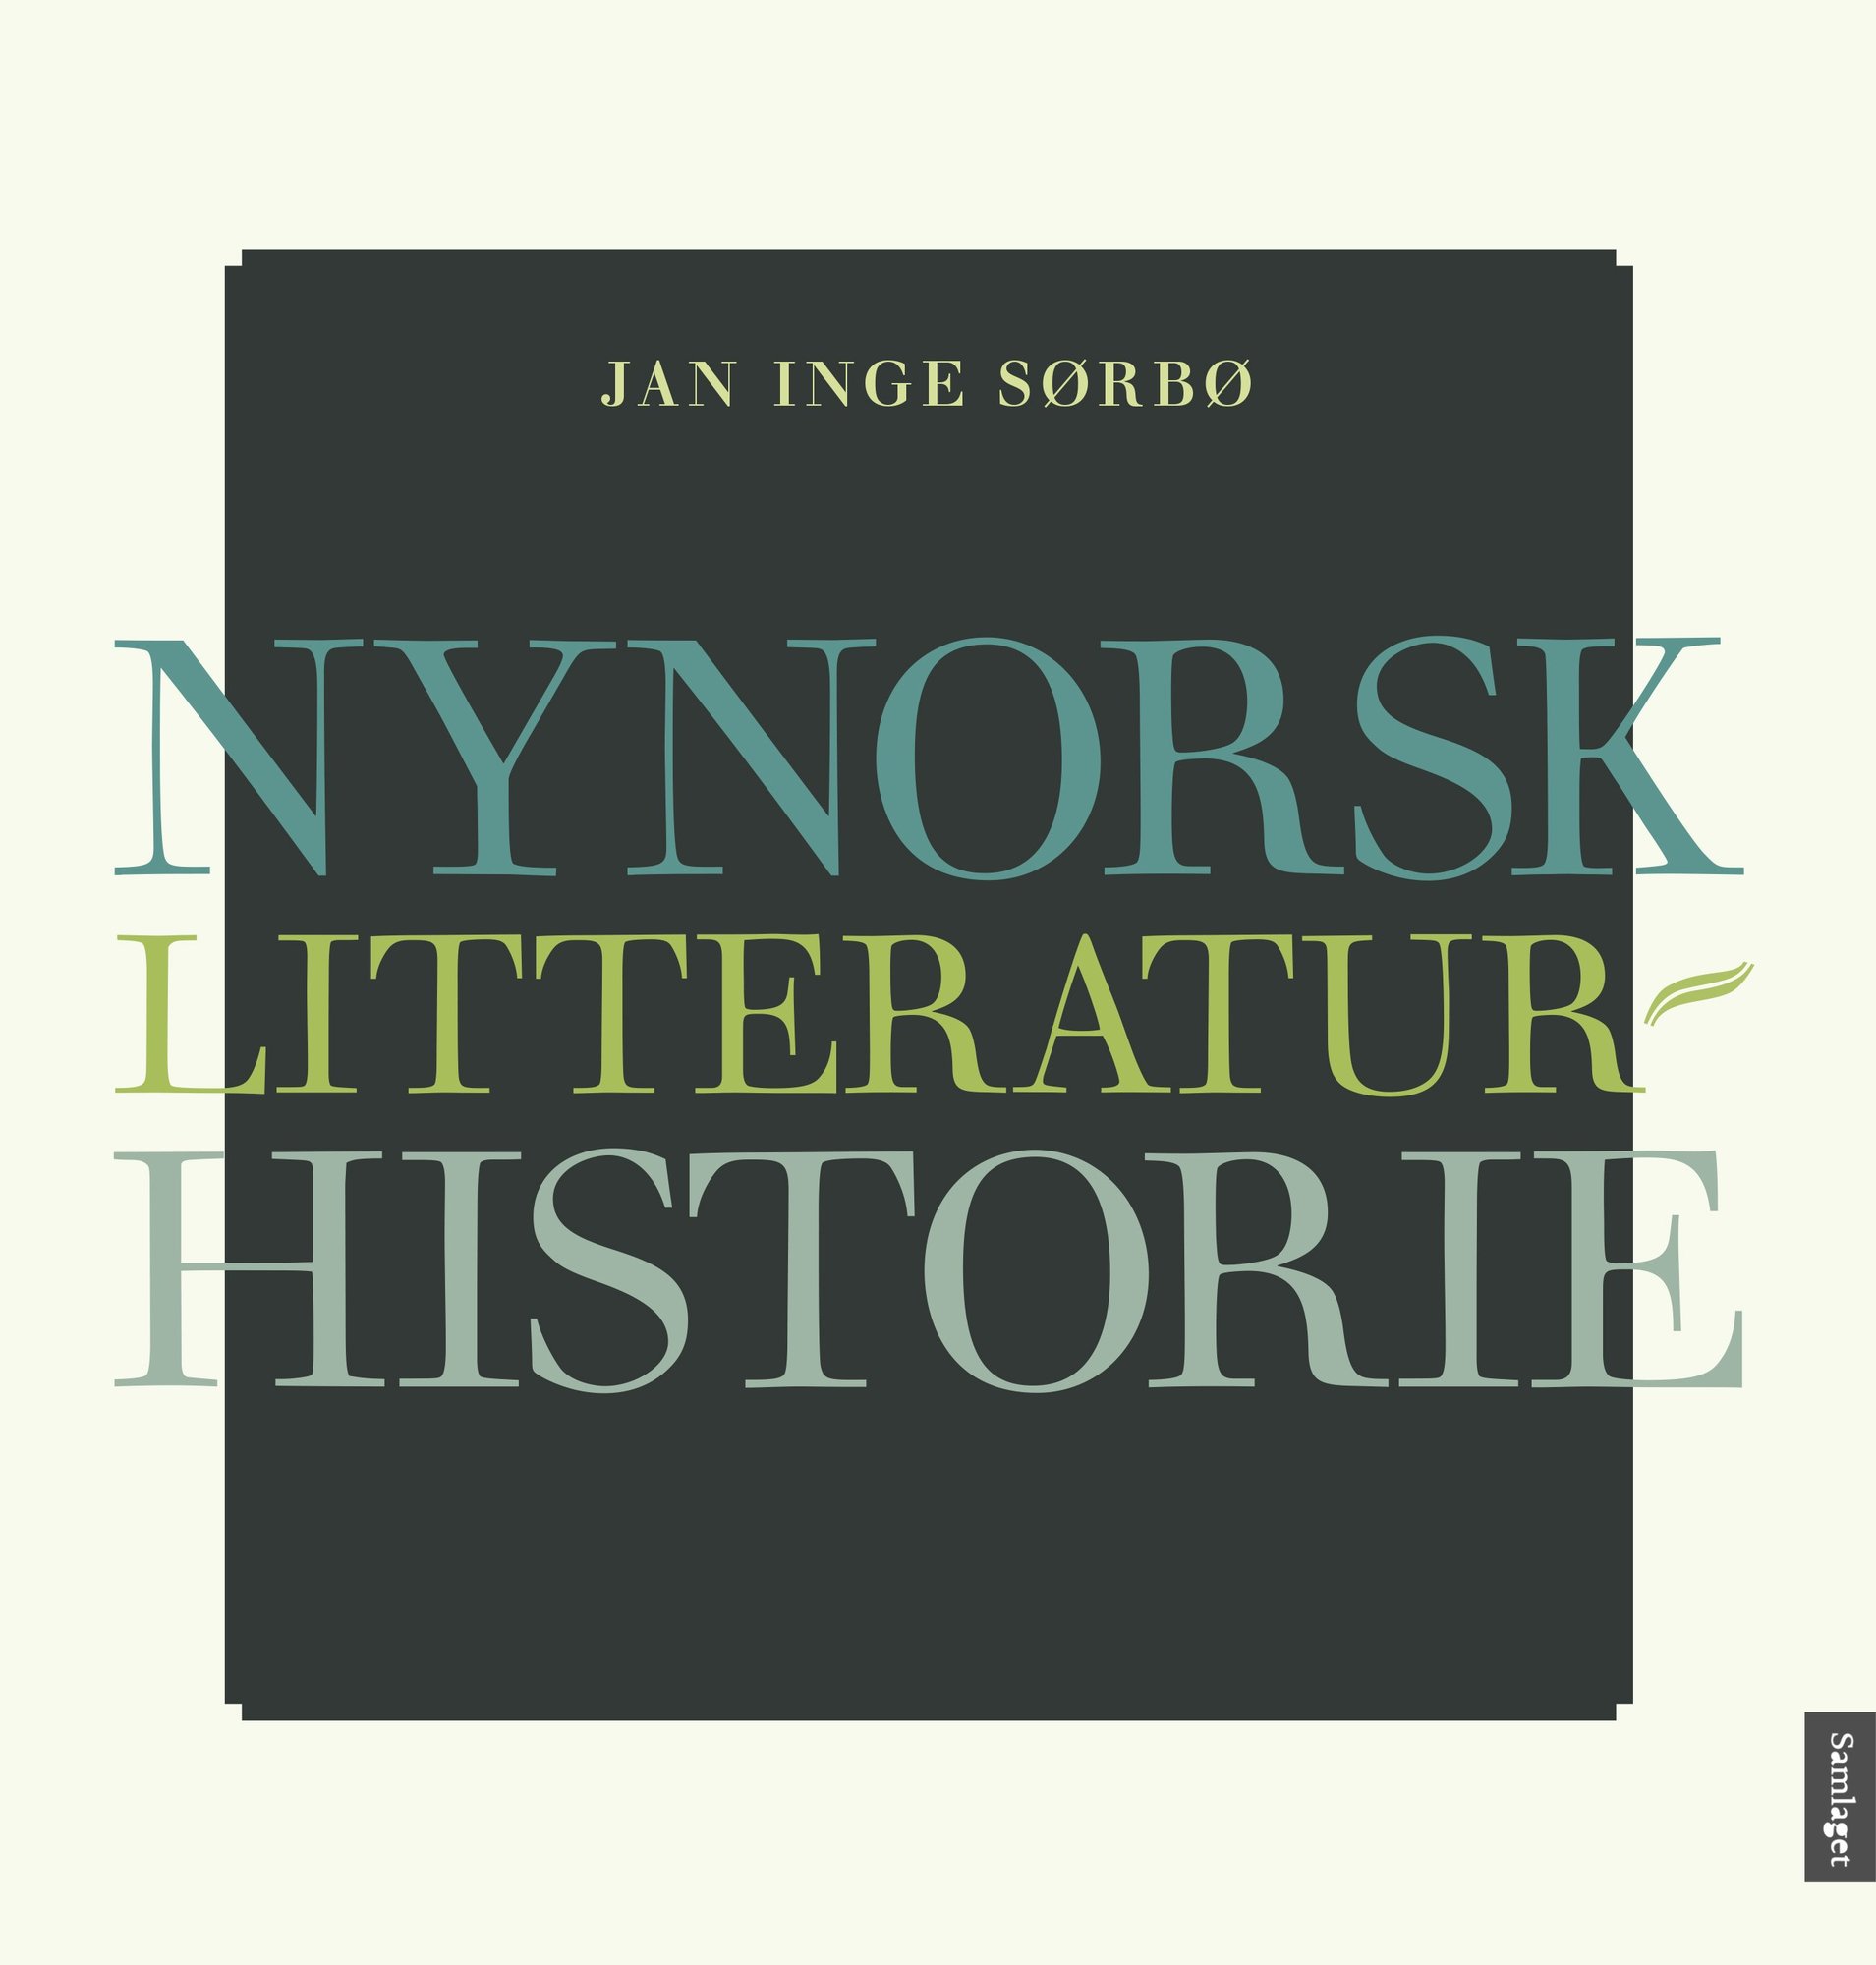 Sørbø nynorsk litteraturhistorie hd